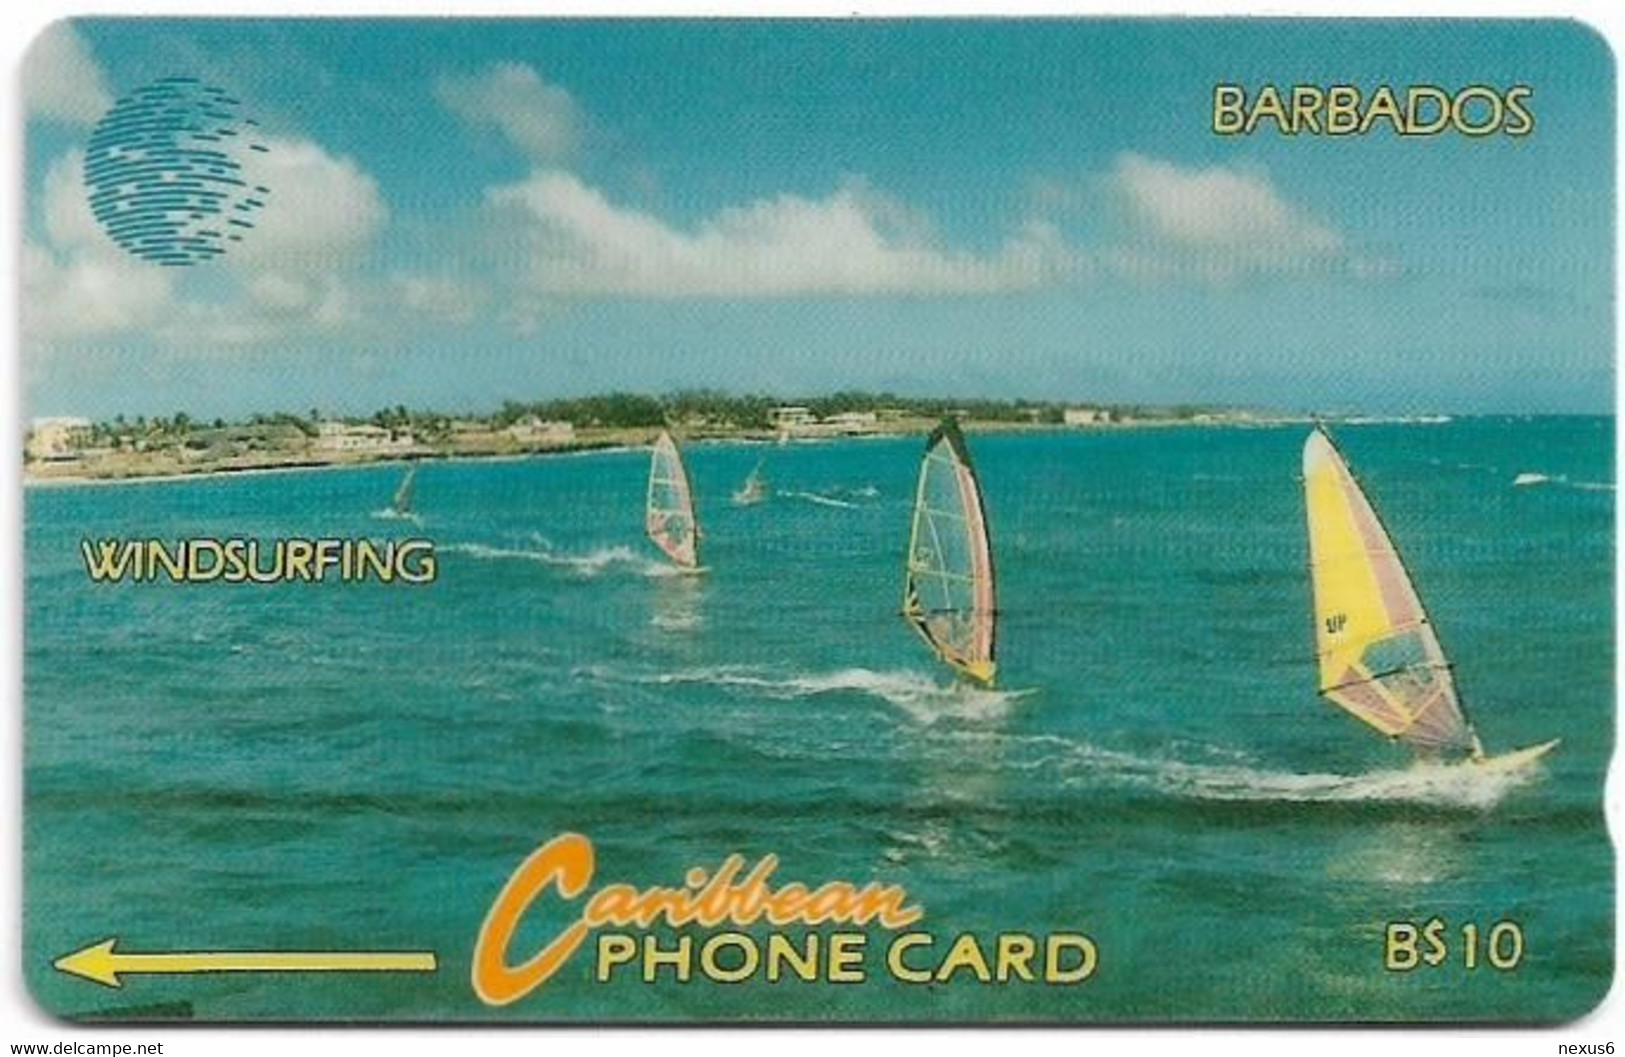 Barbados - C&W (GPT) - Windsurfing, 14CBDD, 1994, Used - Barbados (Barbuda)